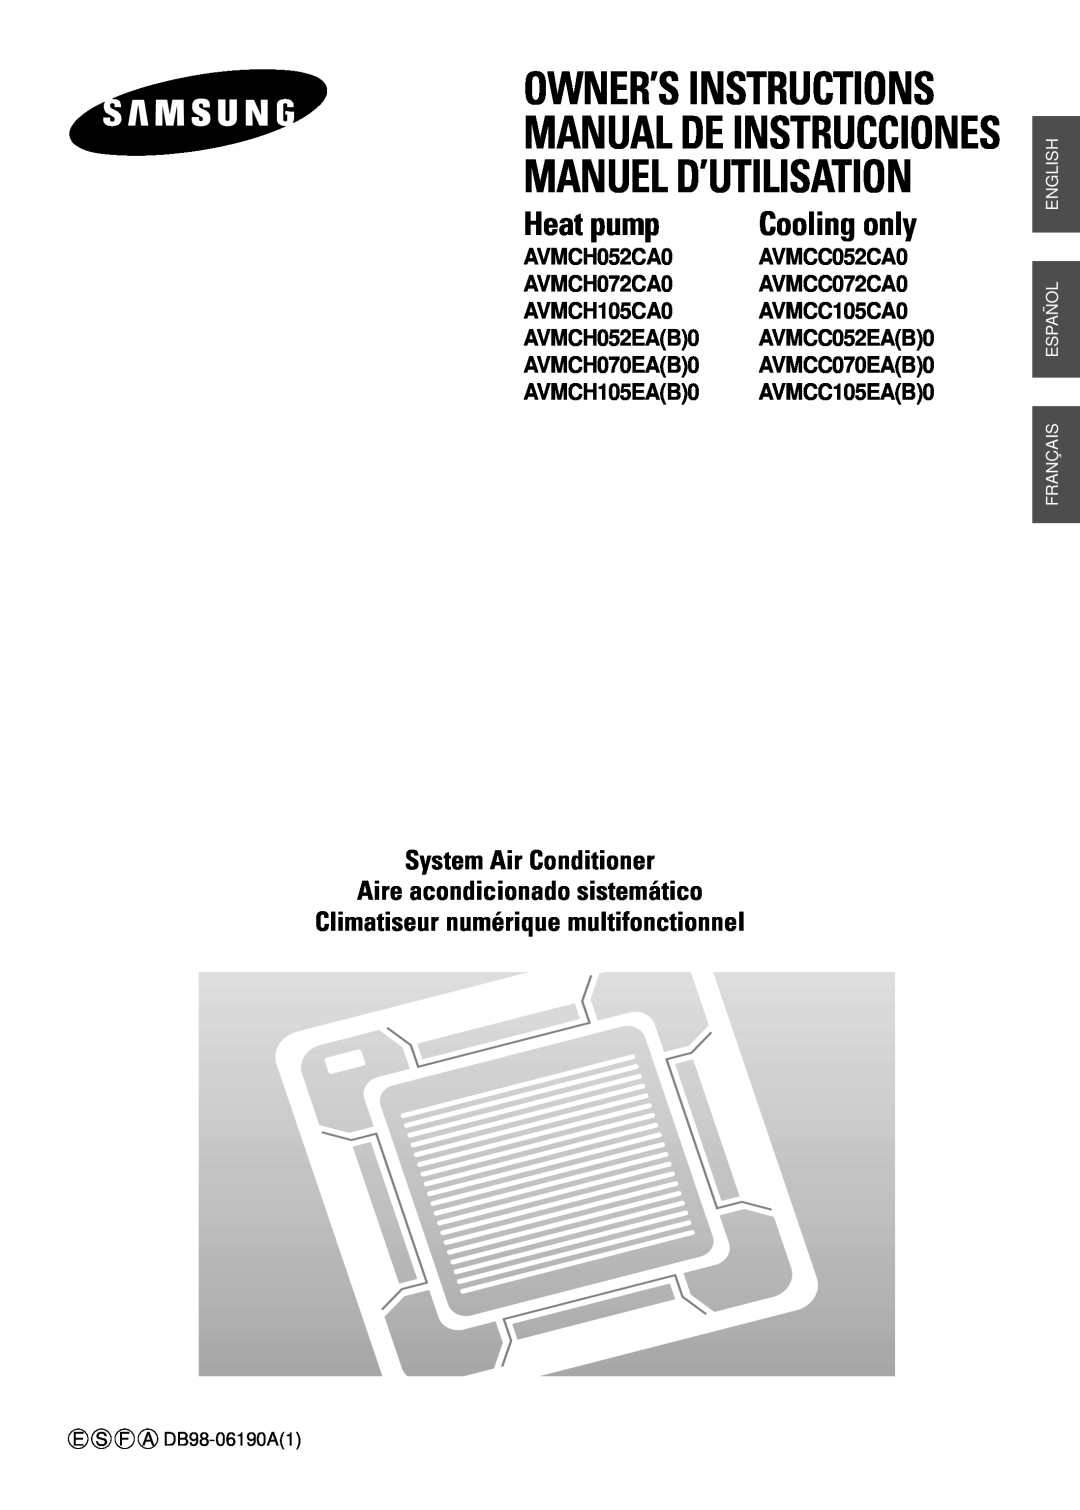 Samsung AVMCC070EA(B)0 manuel dutilisation System Air Conditioner, Aire acondicionado sistemático, Owner’S Instructions 